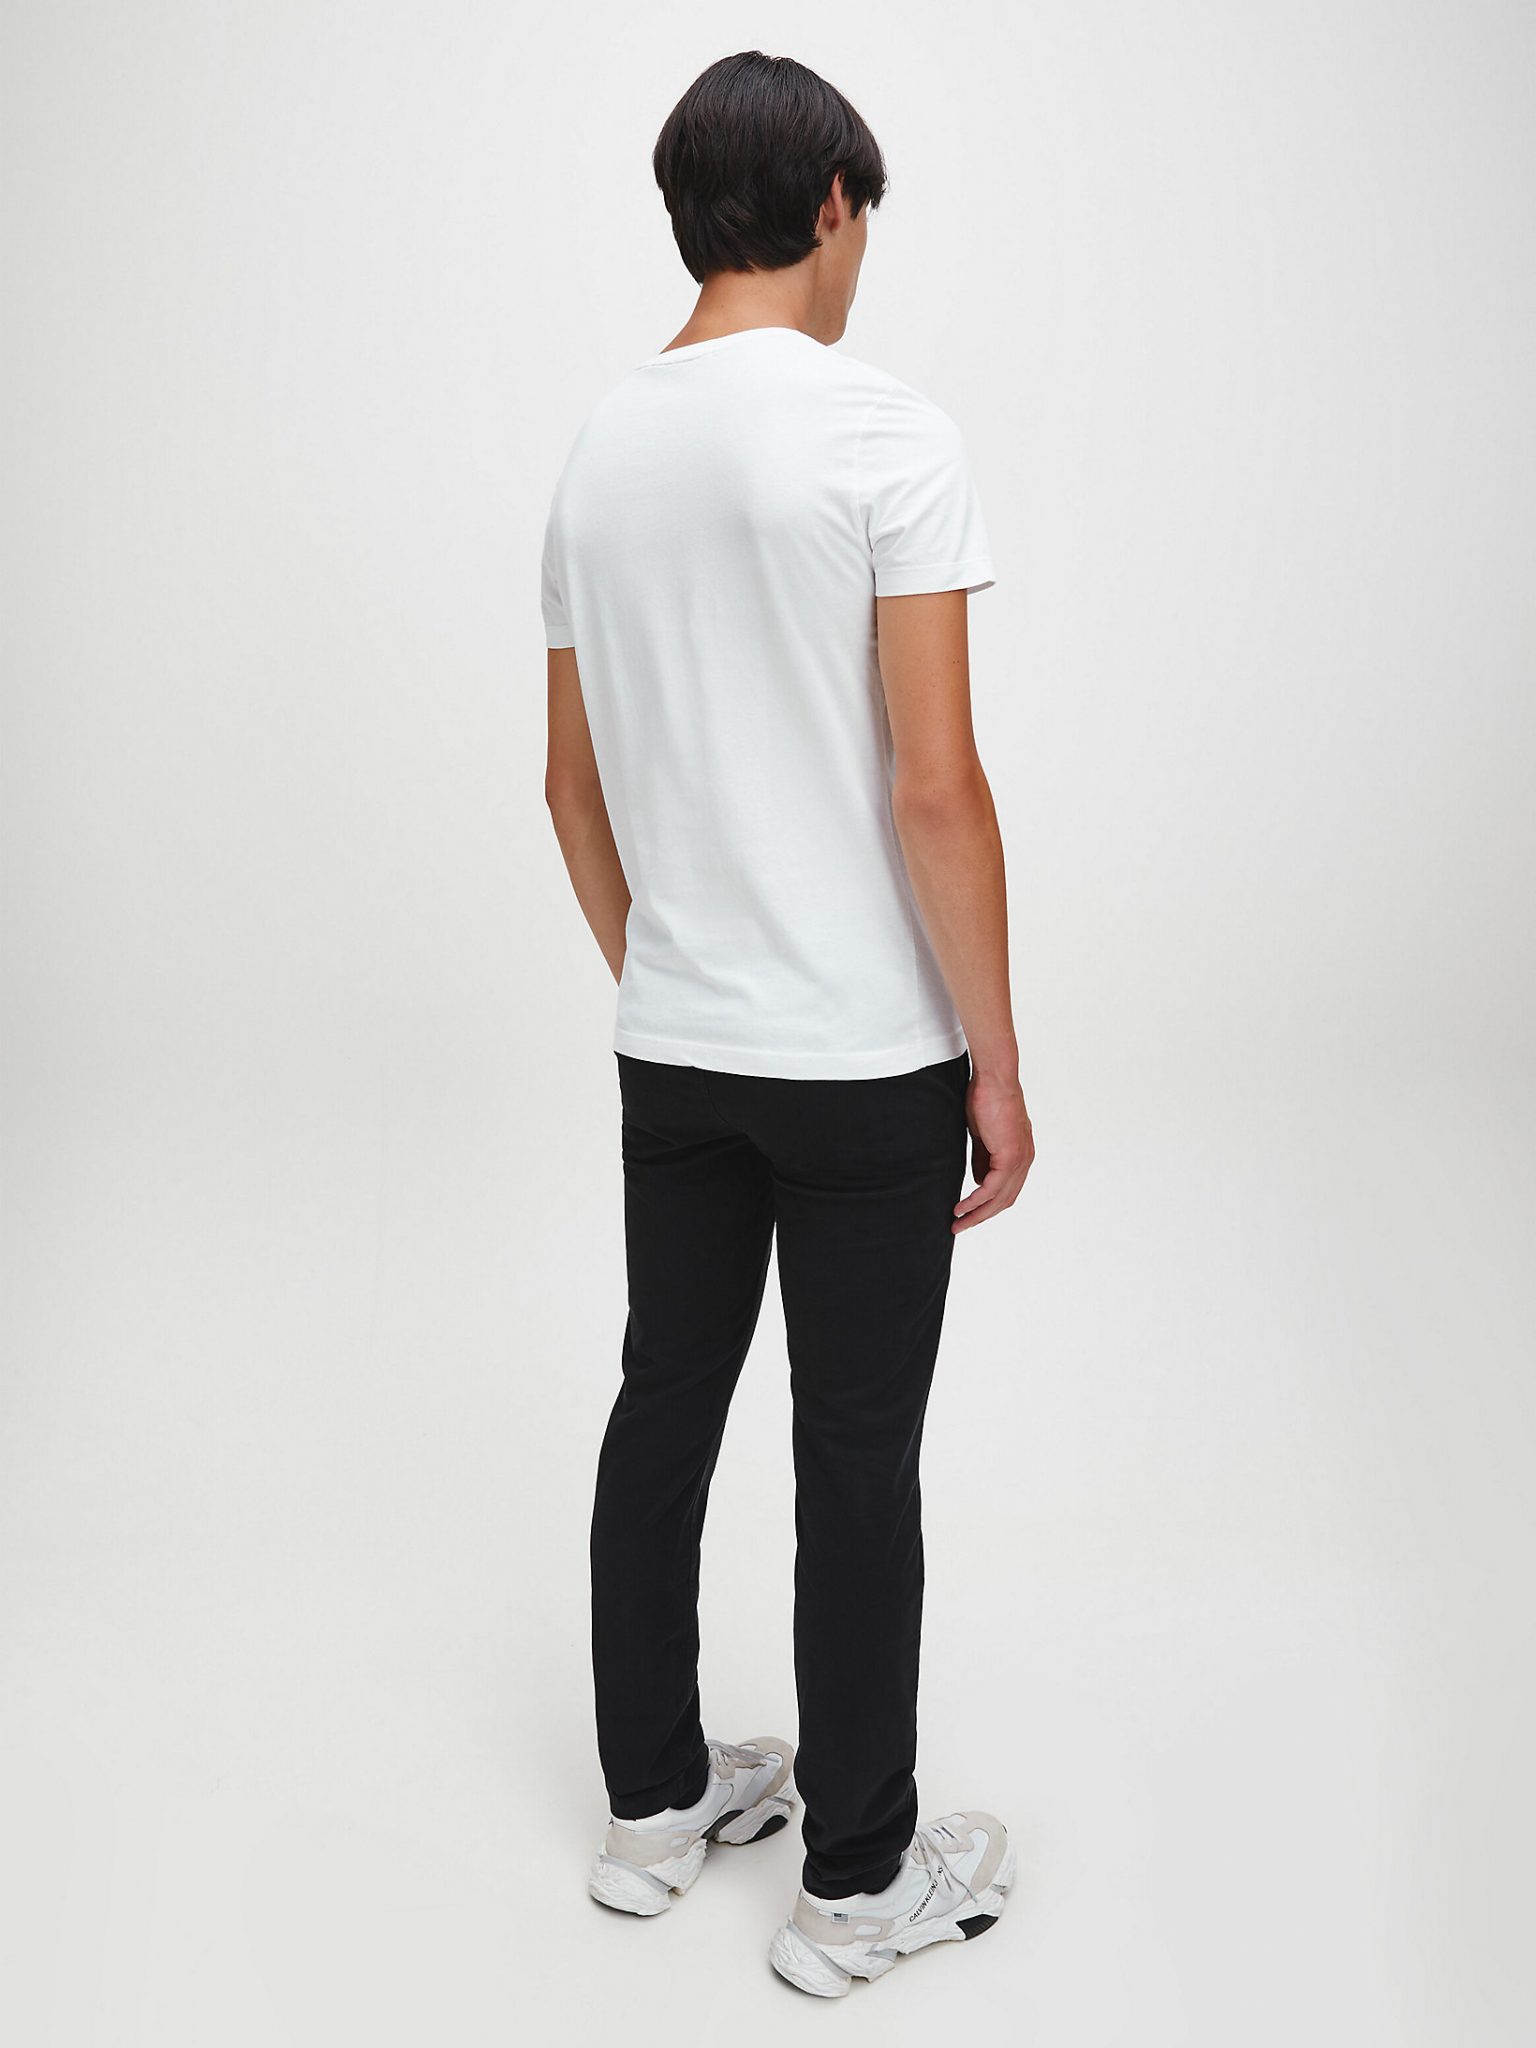 Store - Bright Scandinavian Fashion logo Klein Institutional White T-shirt Buy Calvin